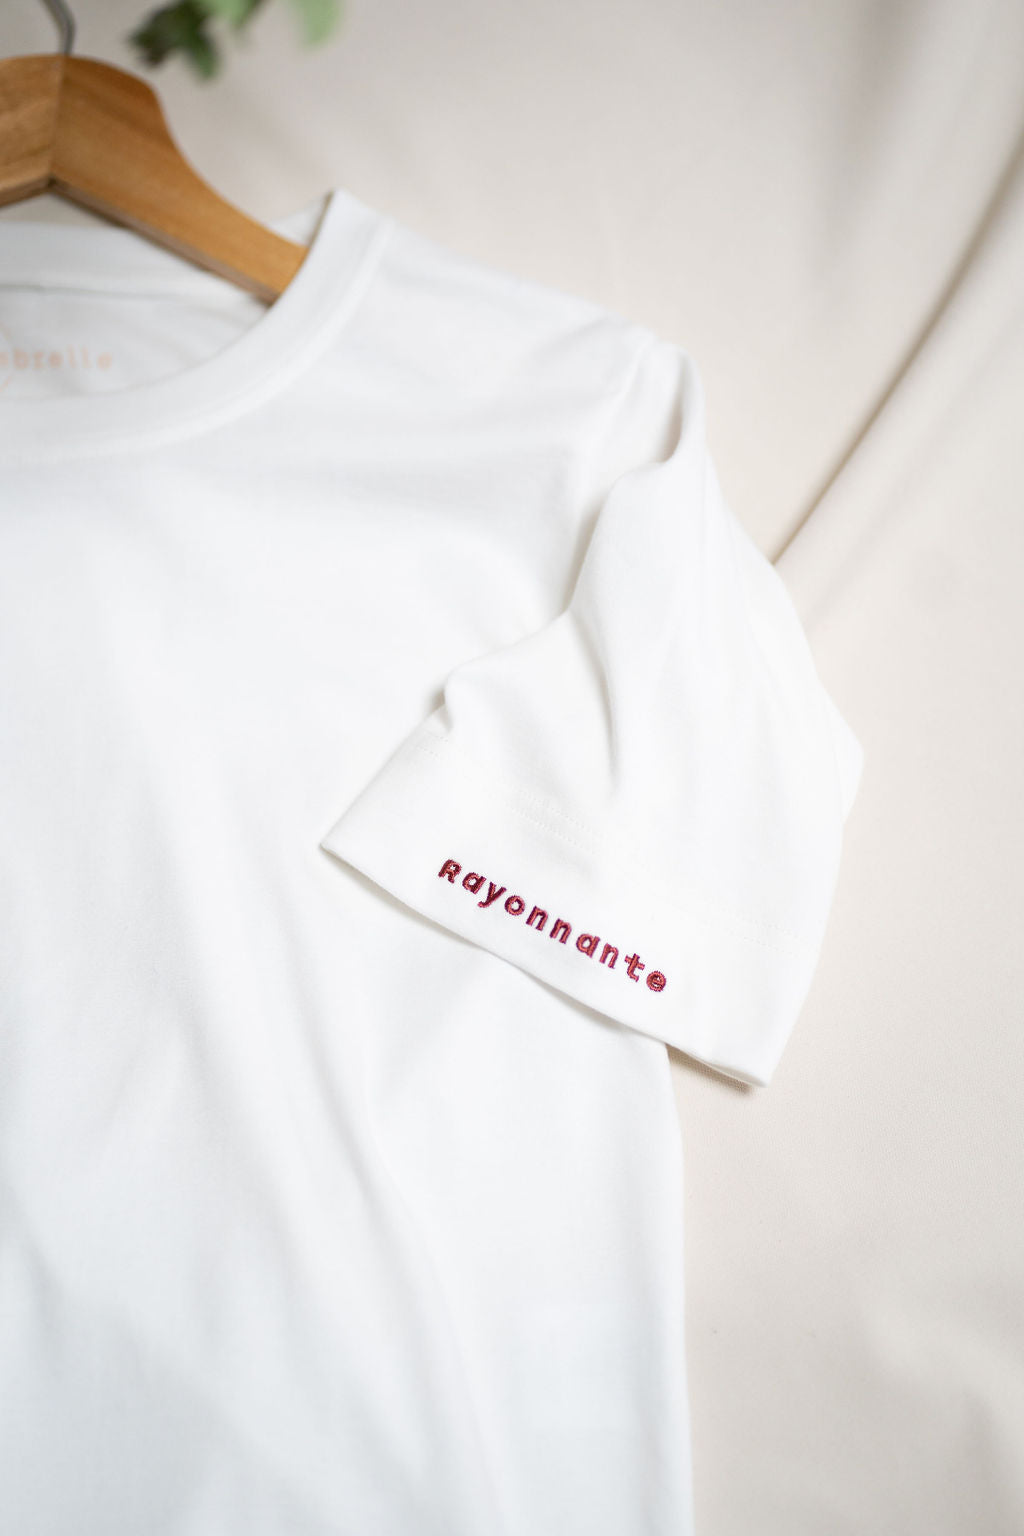 tee-shirt rayonnante femme terracotta coton supima anti-uv UPF50 écoresponsable made in europe éthique ombrelle